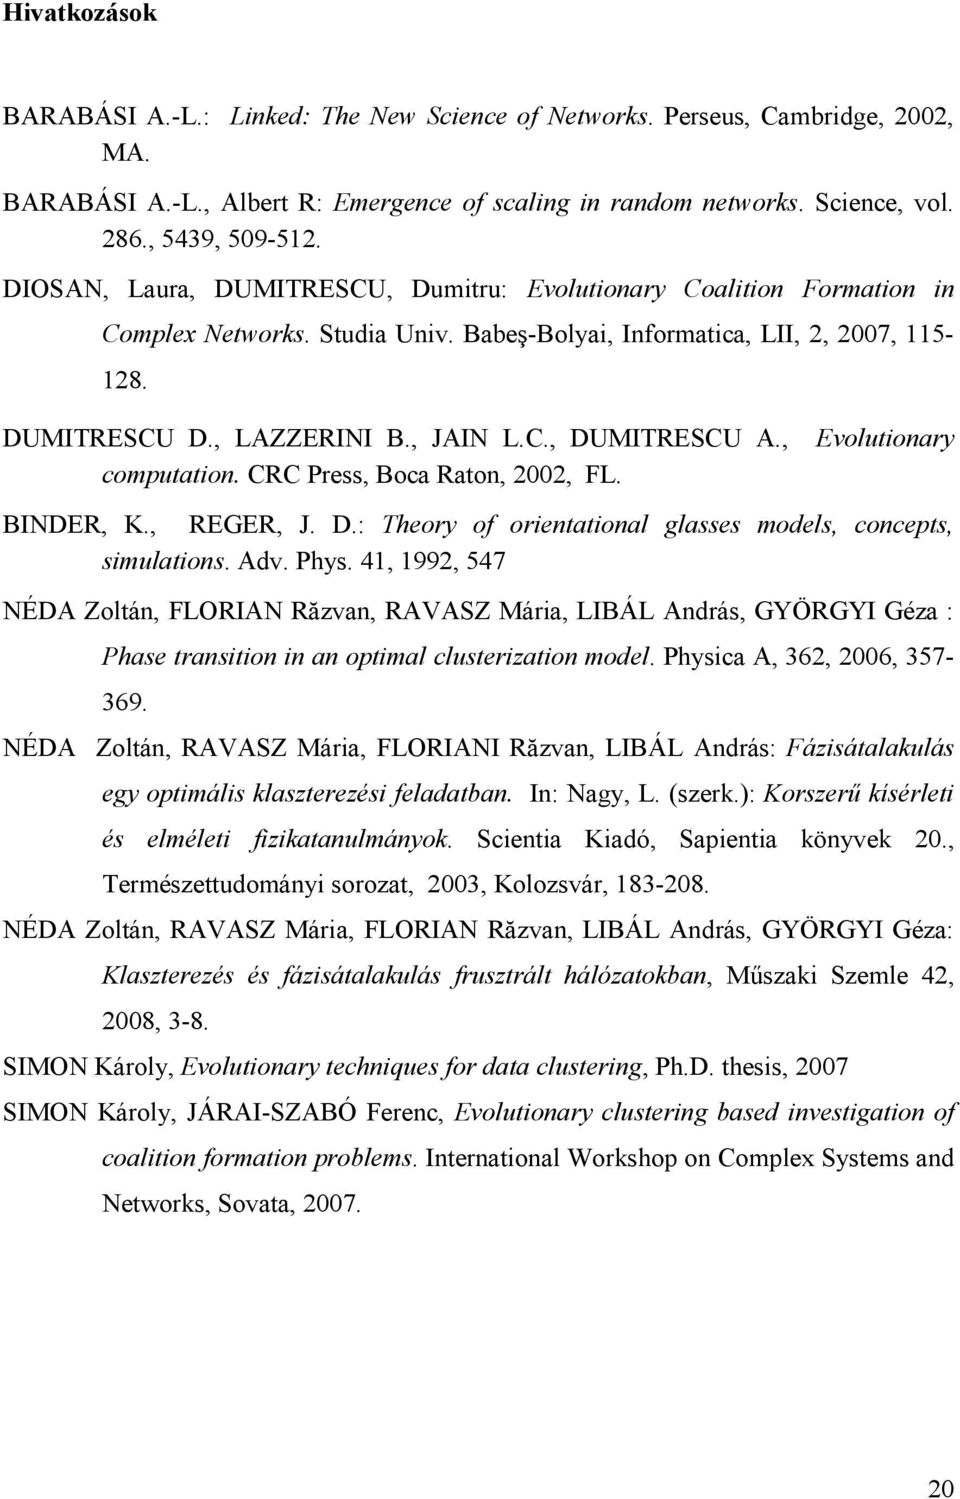 , computation. CRC Press, Boca Raton, 2002, FL. Evolutionary BINDER, K., REGER, J. D.: Theory of orientational glasses models, concepts, simulations. Adv. Phys.